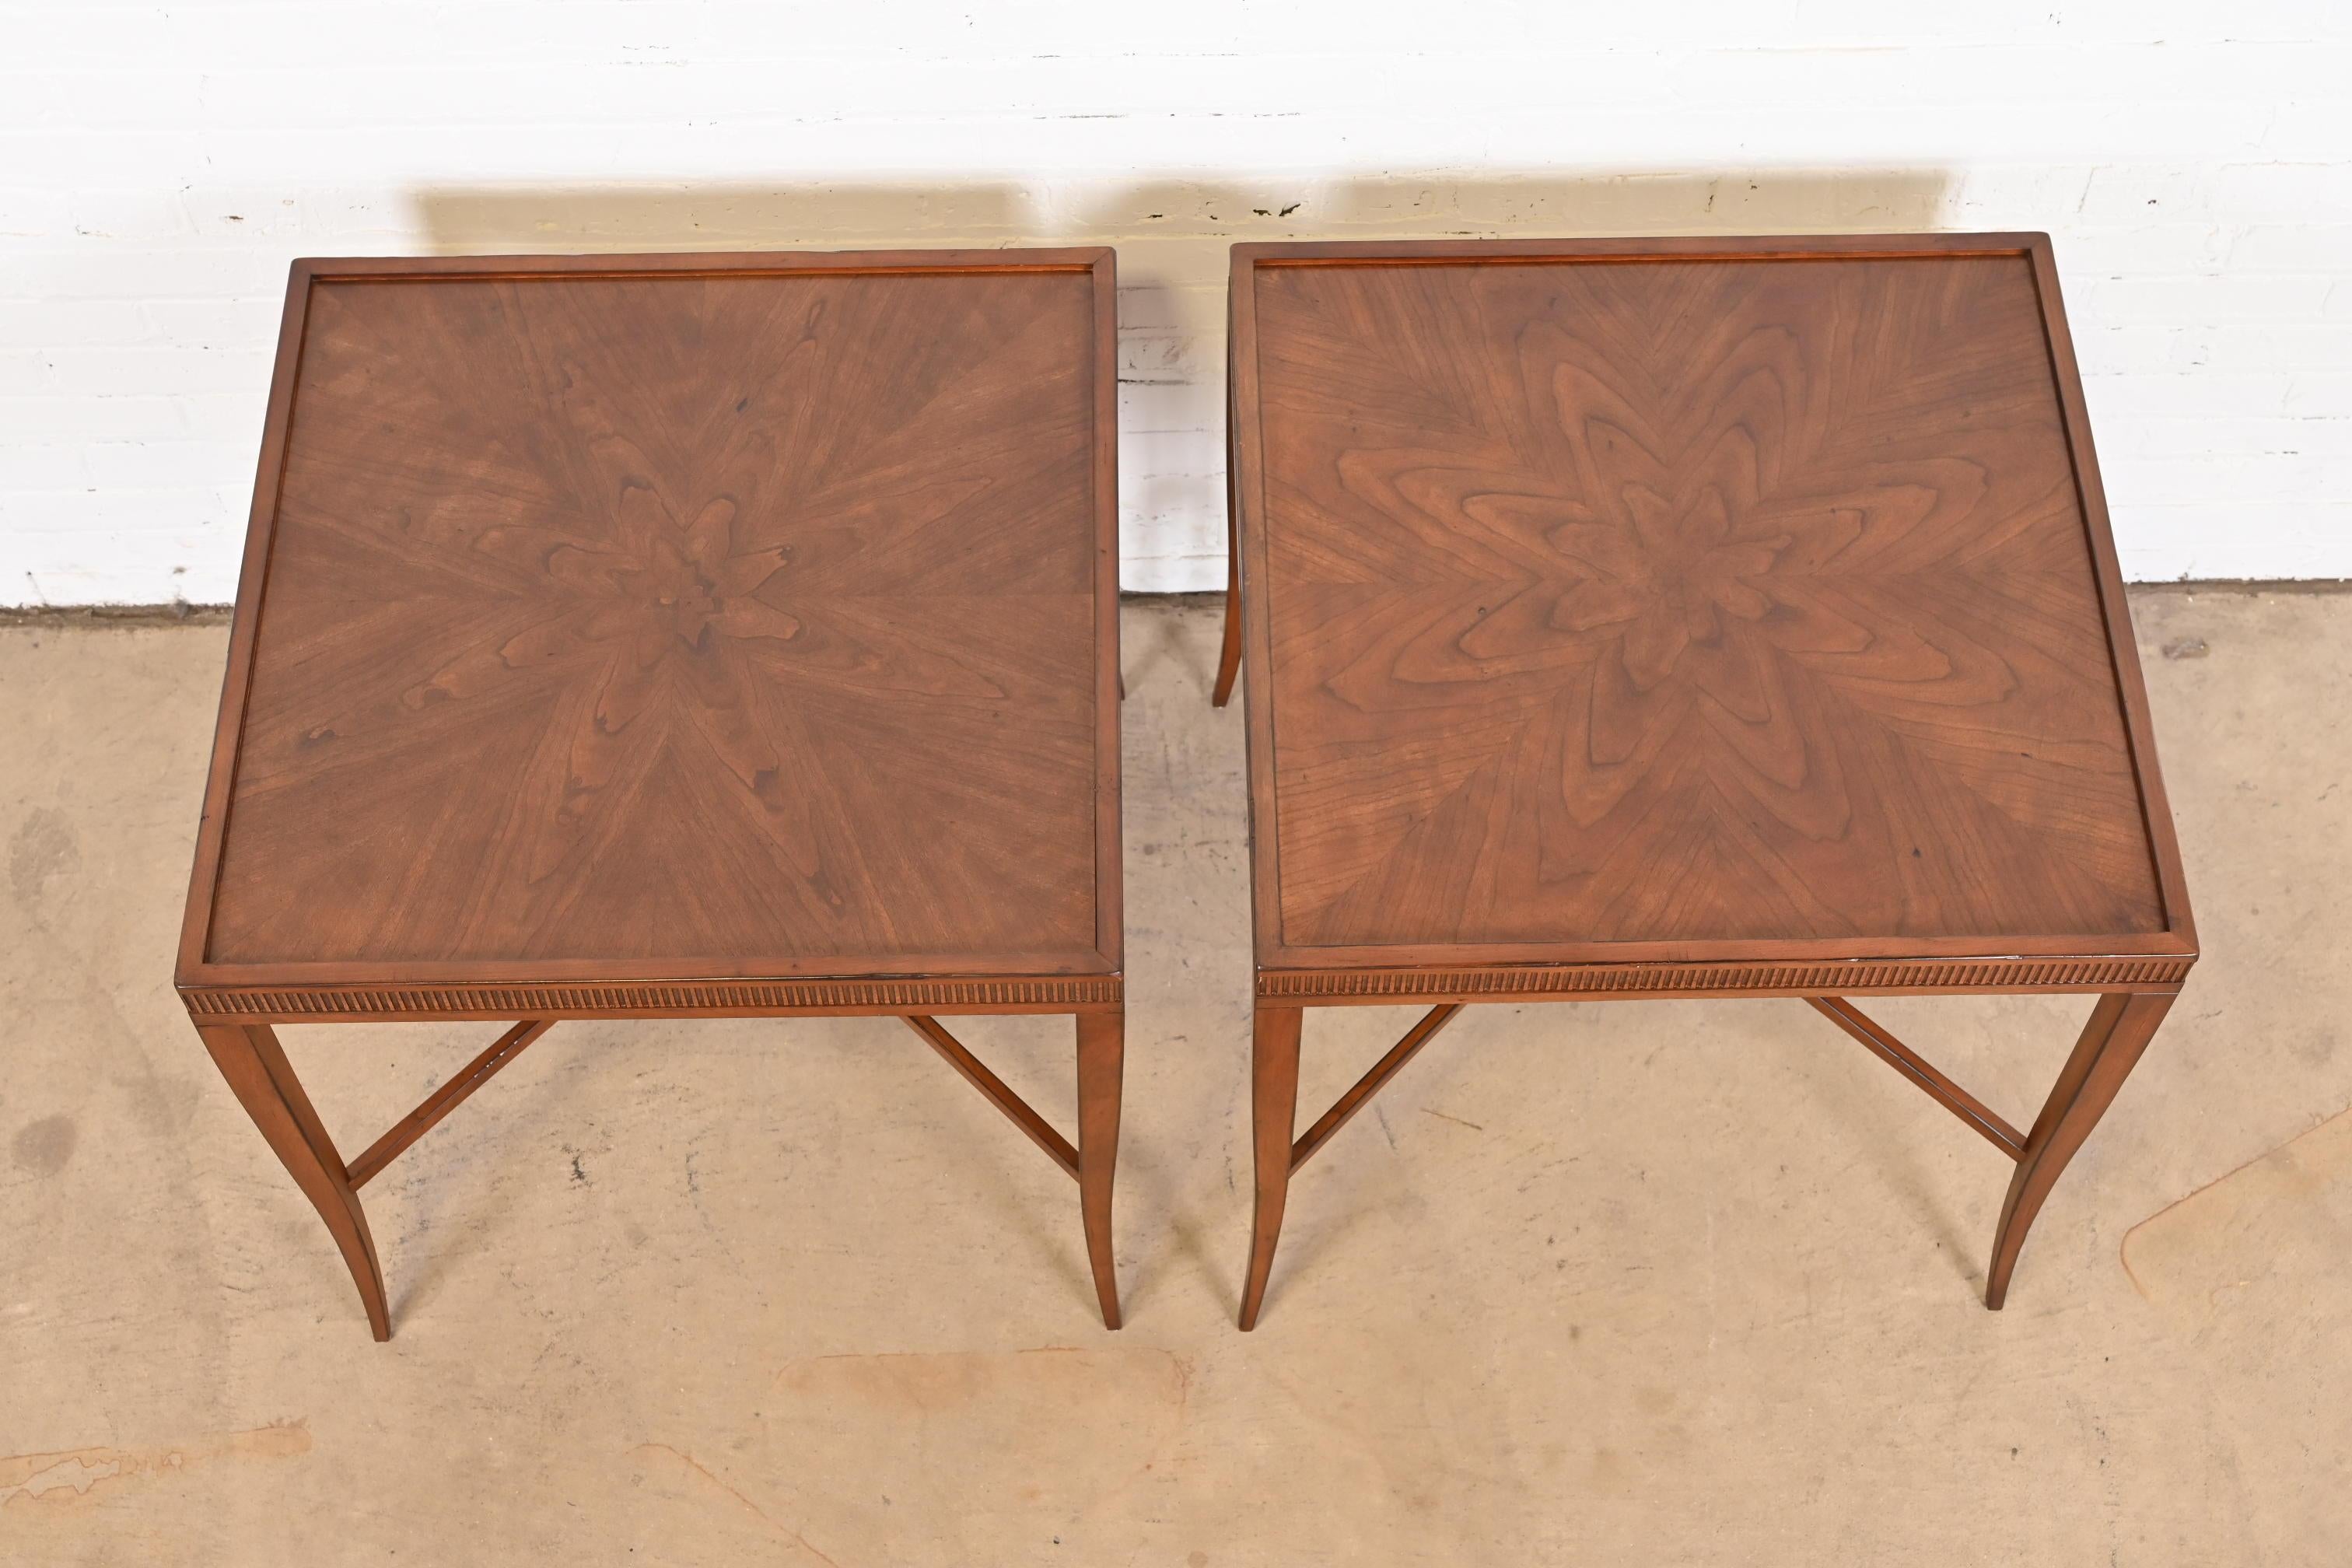 Harden Furniture Regency Inlaid Starburst Parquetry Cherry Wood Side Tables 1